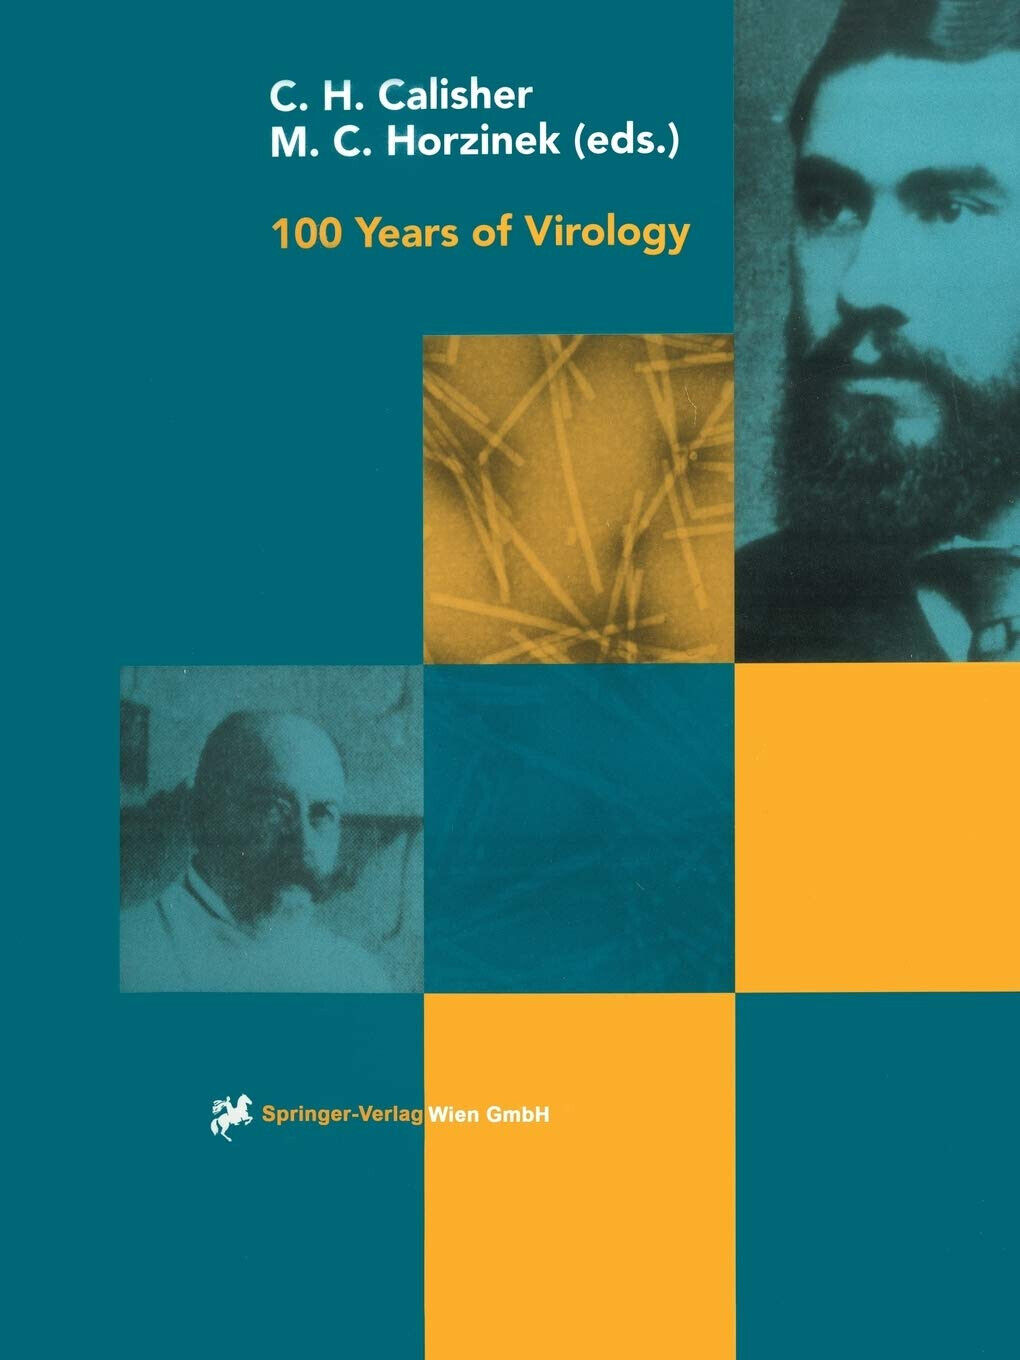 100 Years of Virology - Charles H. Calisher  - Springer, 1999